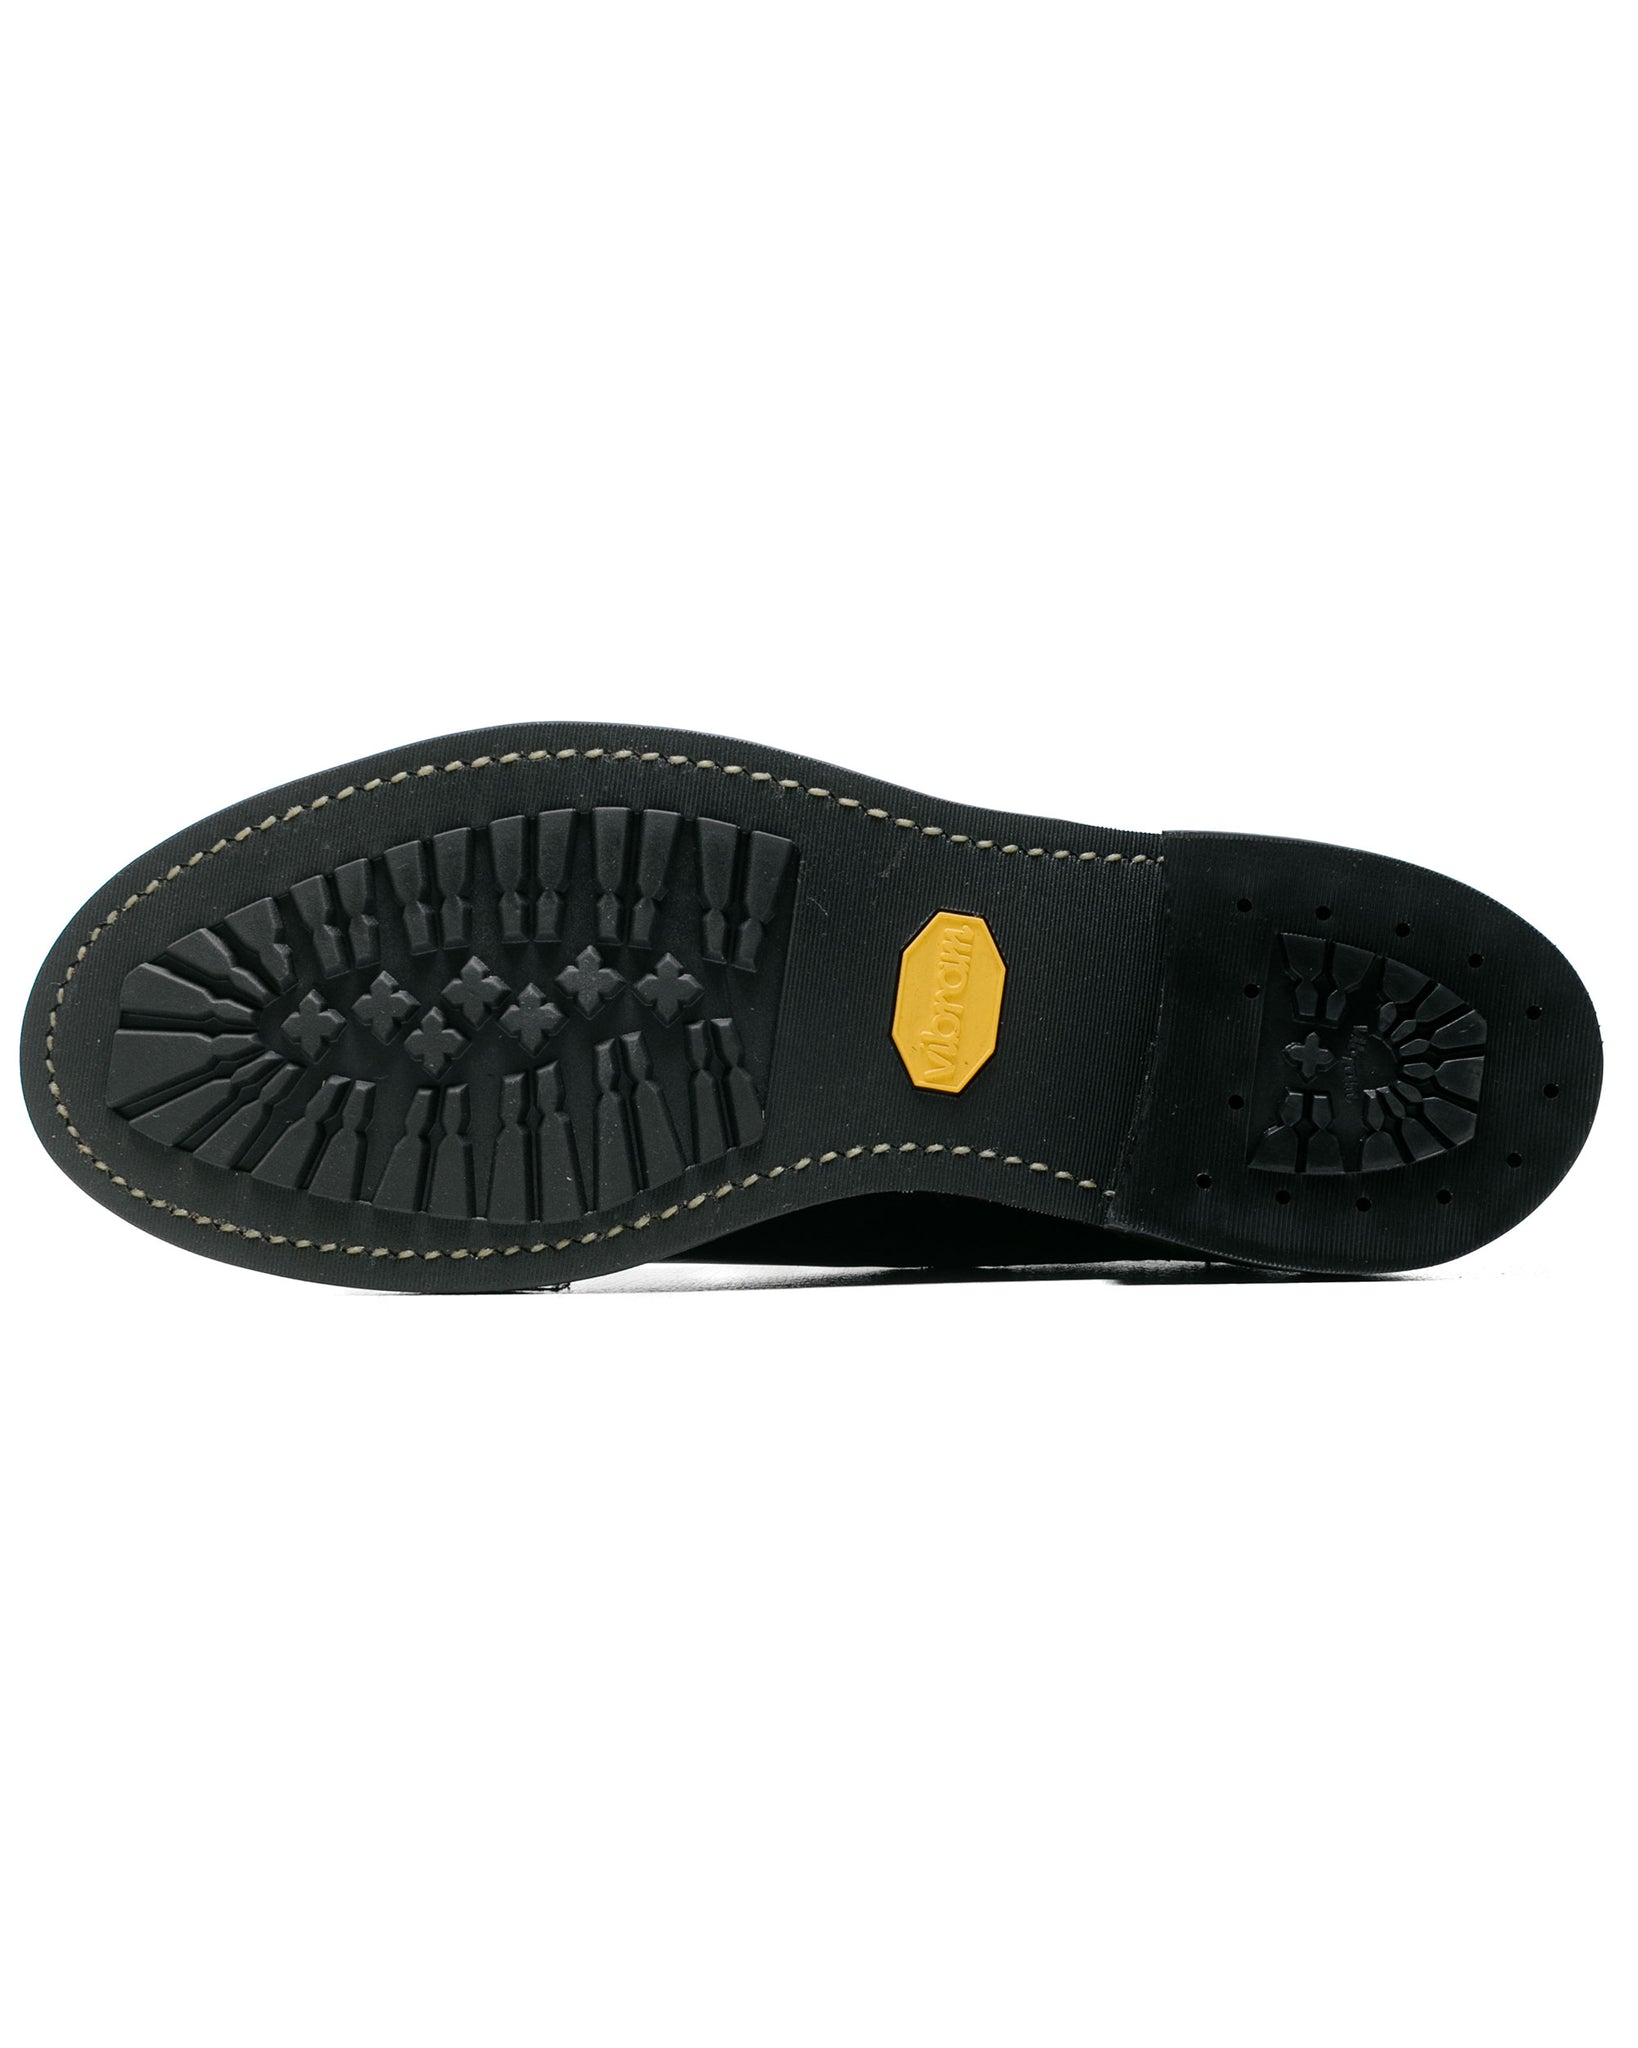 John Lofgren Bootmaker Chelsea Boots Horween CXL Black sole